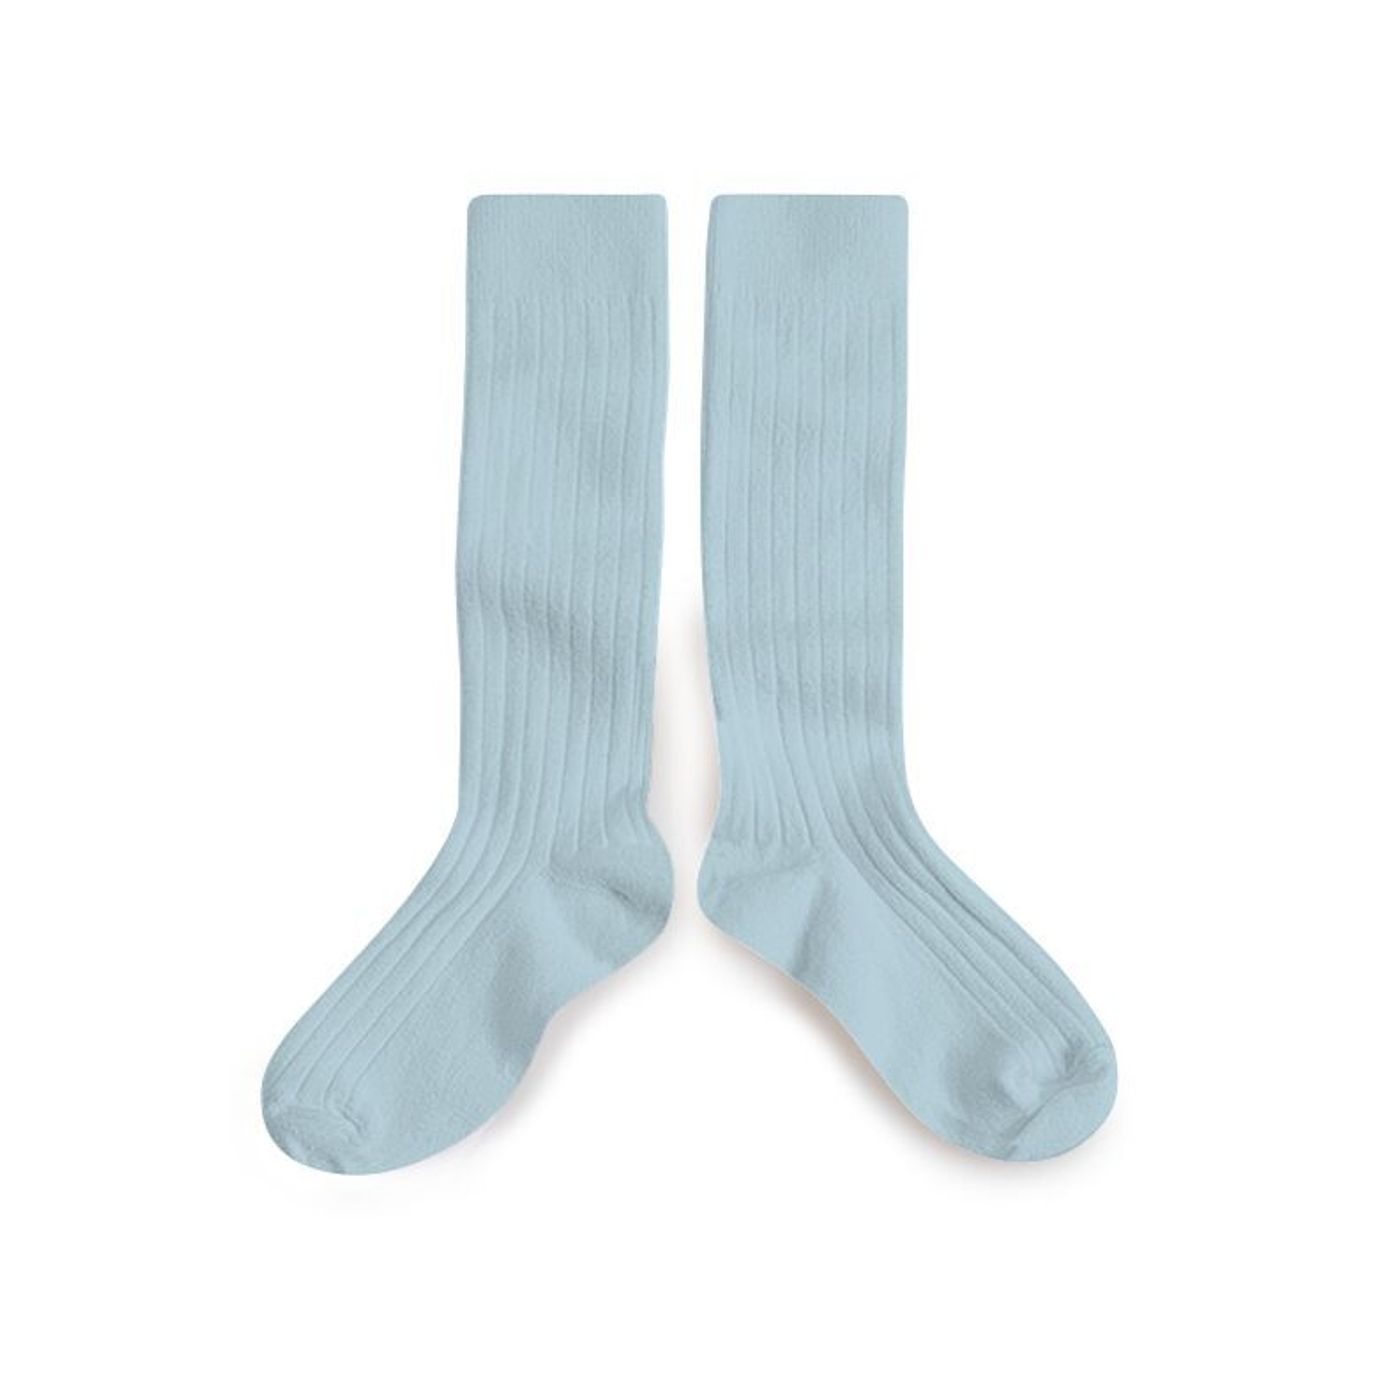 Collégien Knee high socks La Haute bleu de pastel 2950 132 La